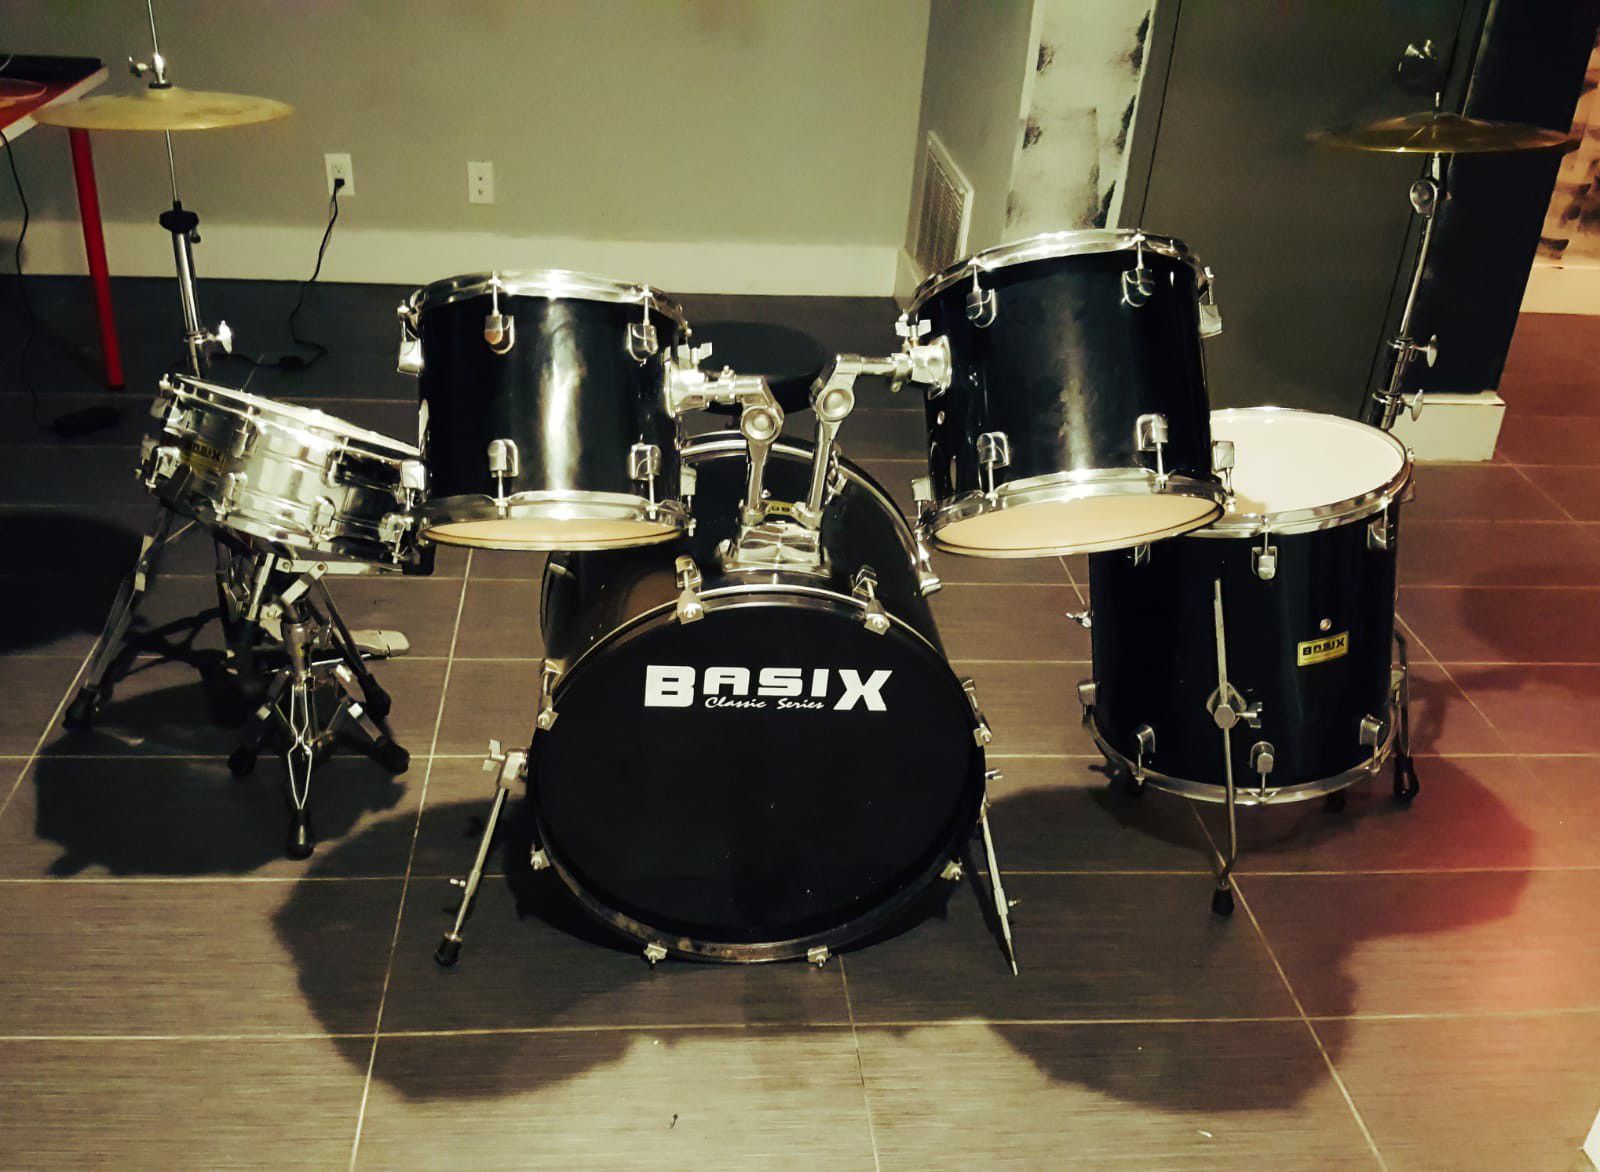 Basix slightly used drum sets like brand new